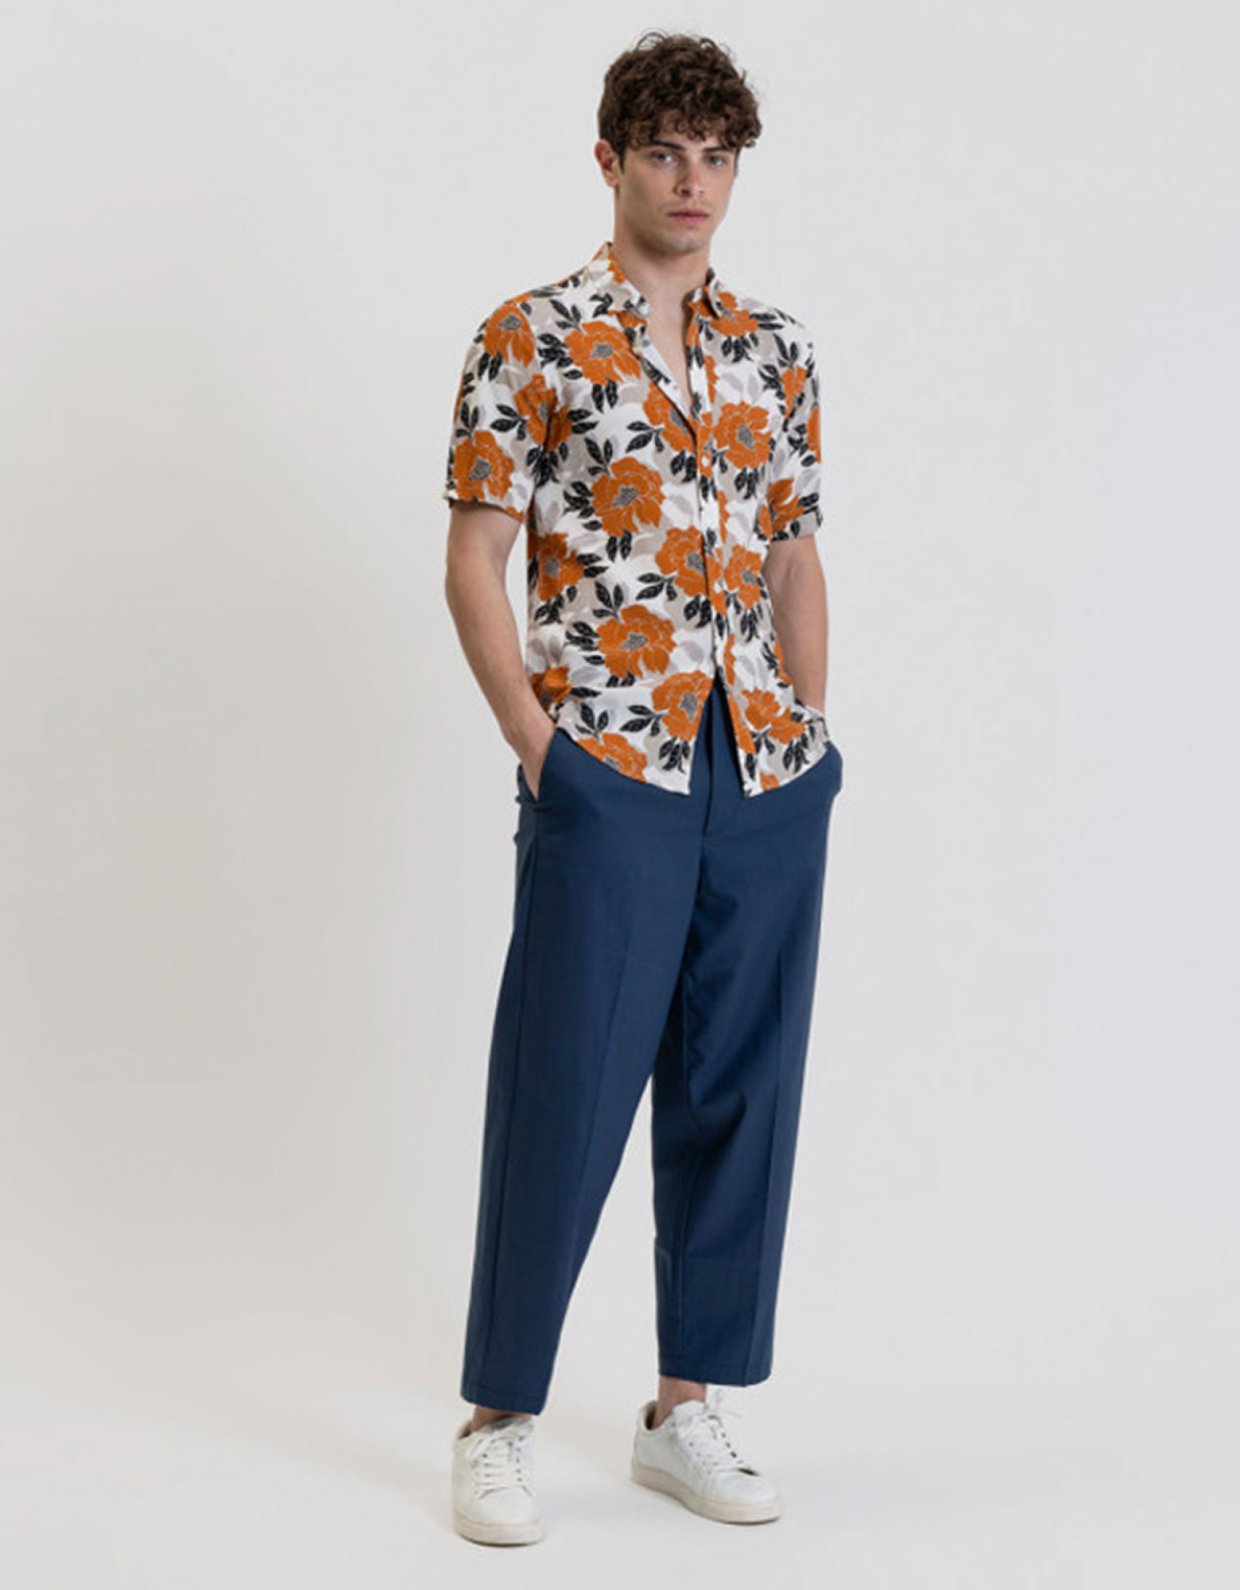 Gianni Lupo Floral print orange shirt